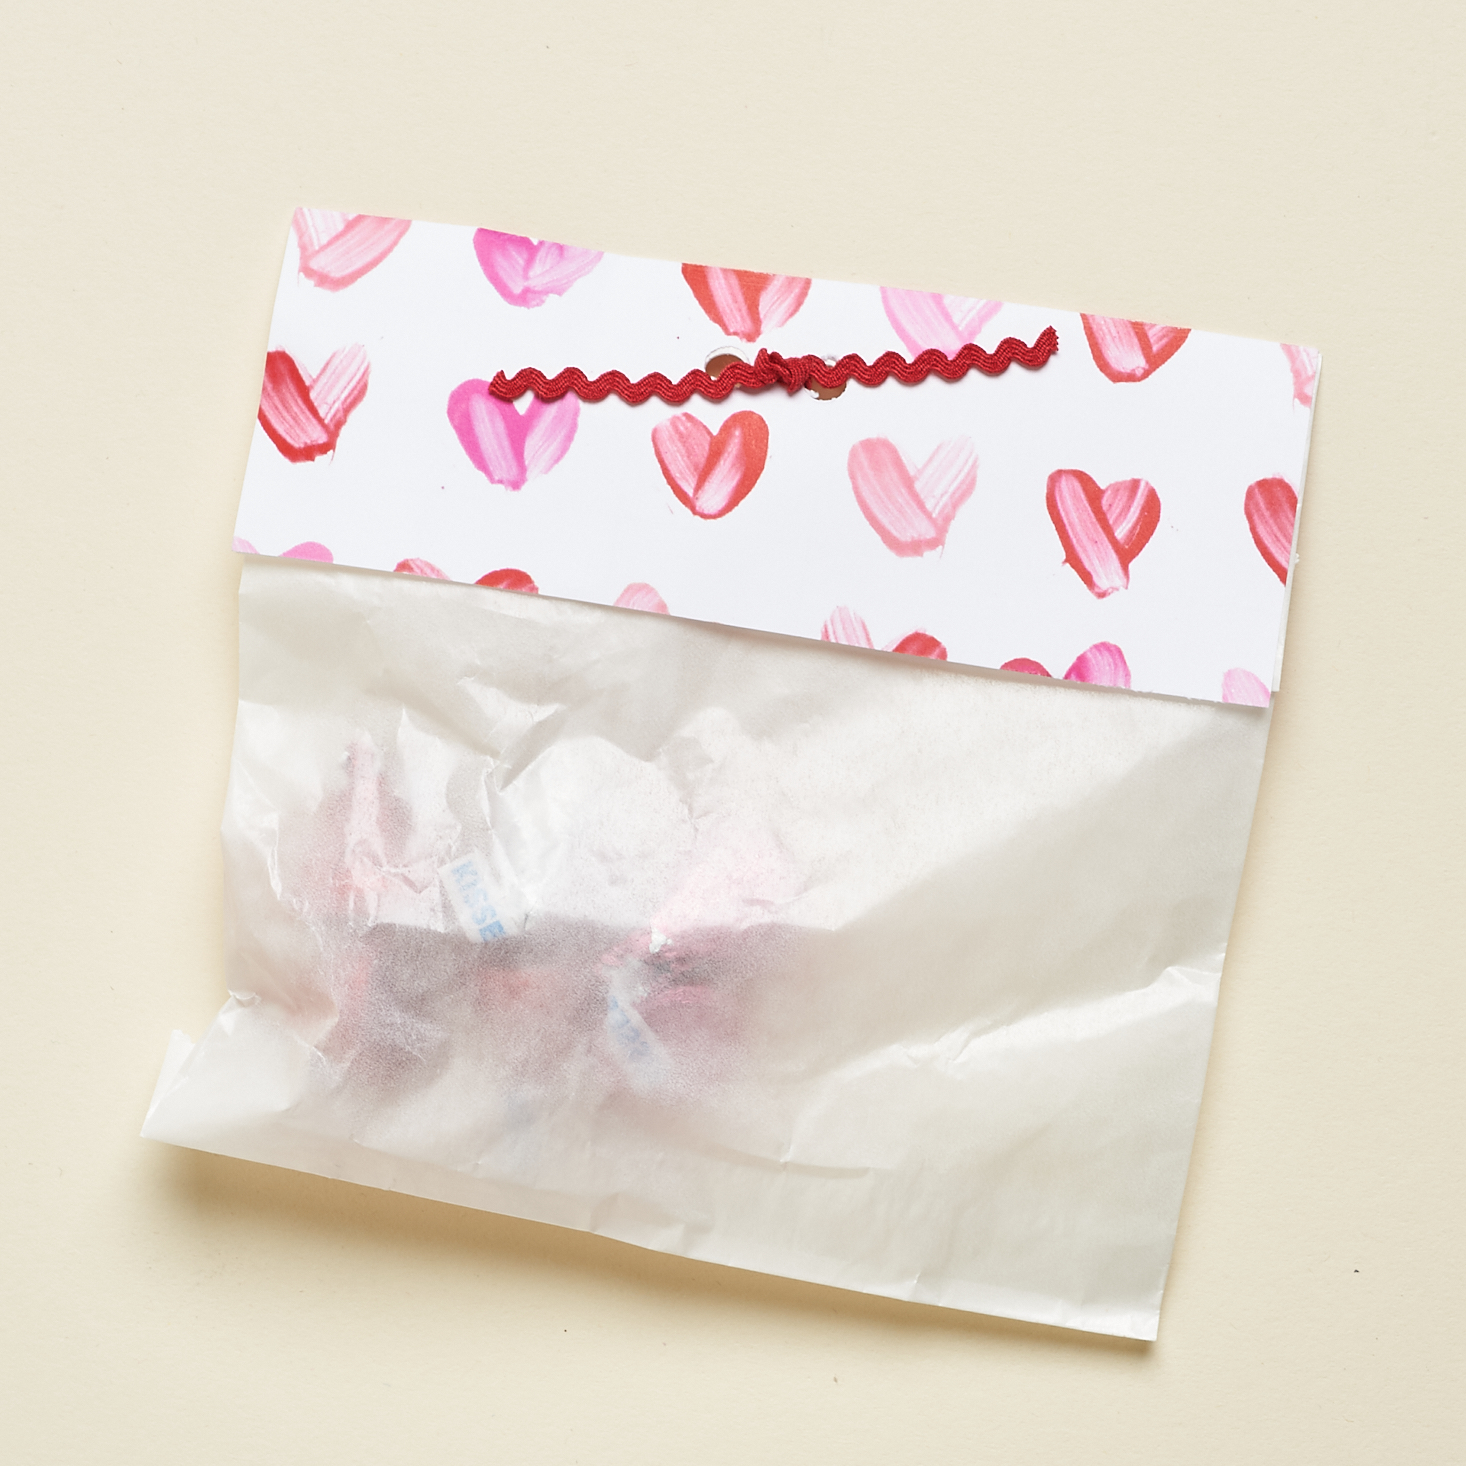 Bag of treats from Postmarkd Studio February 2021